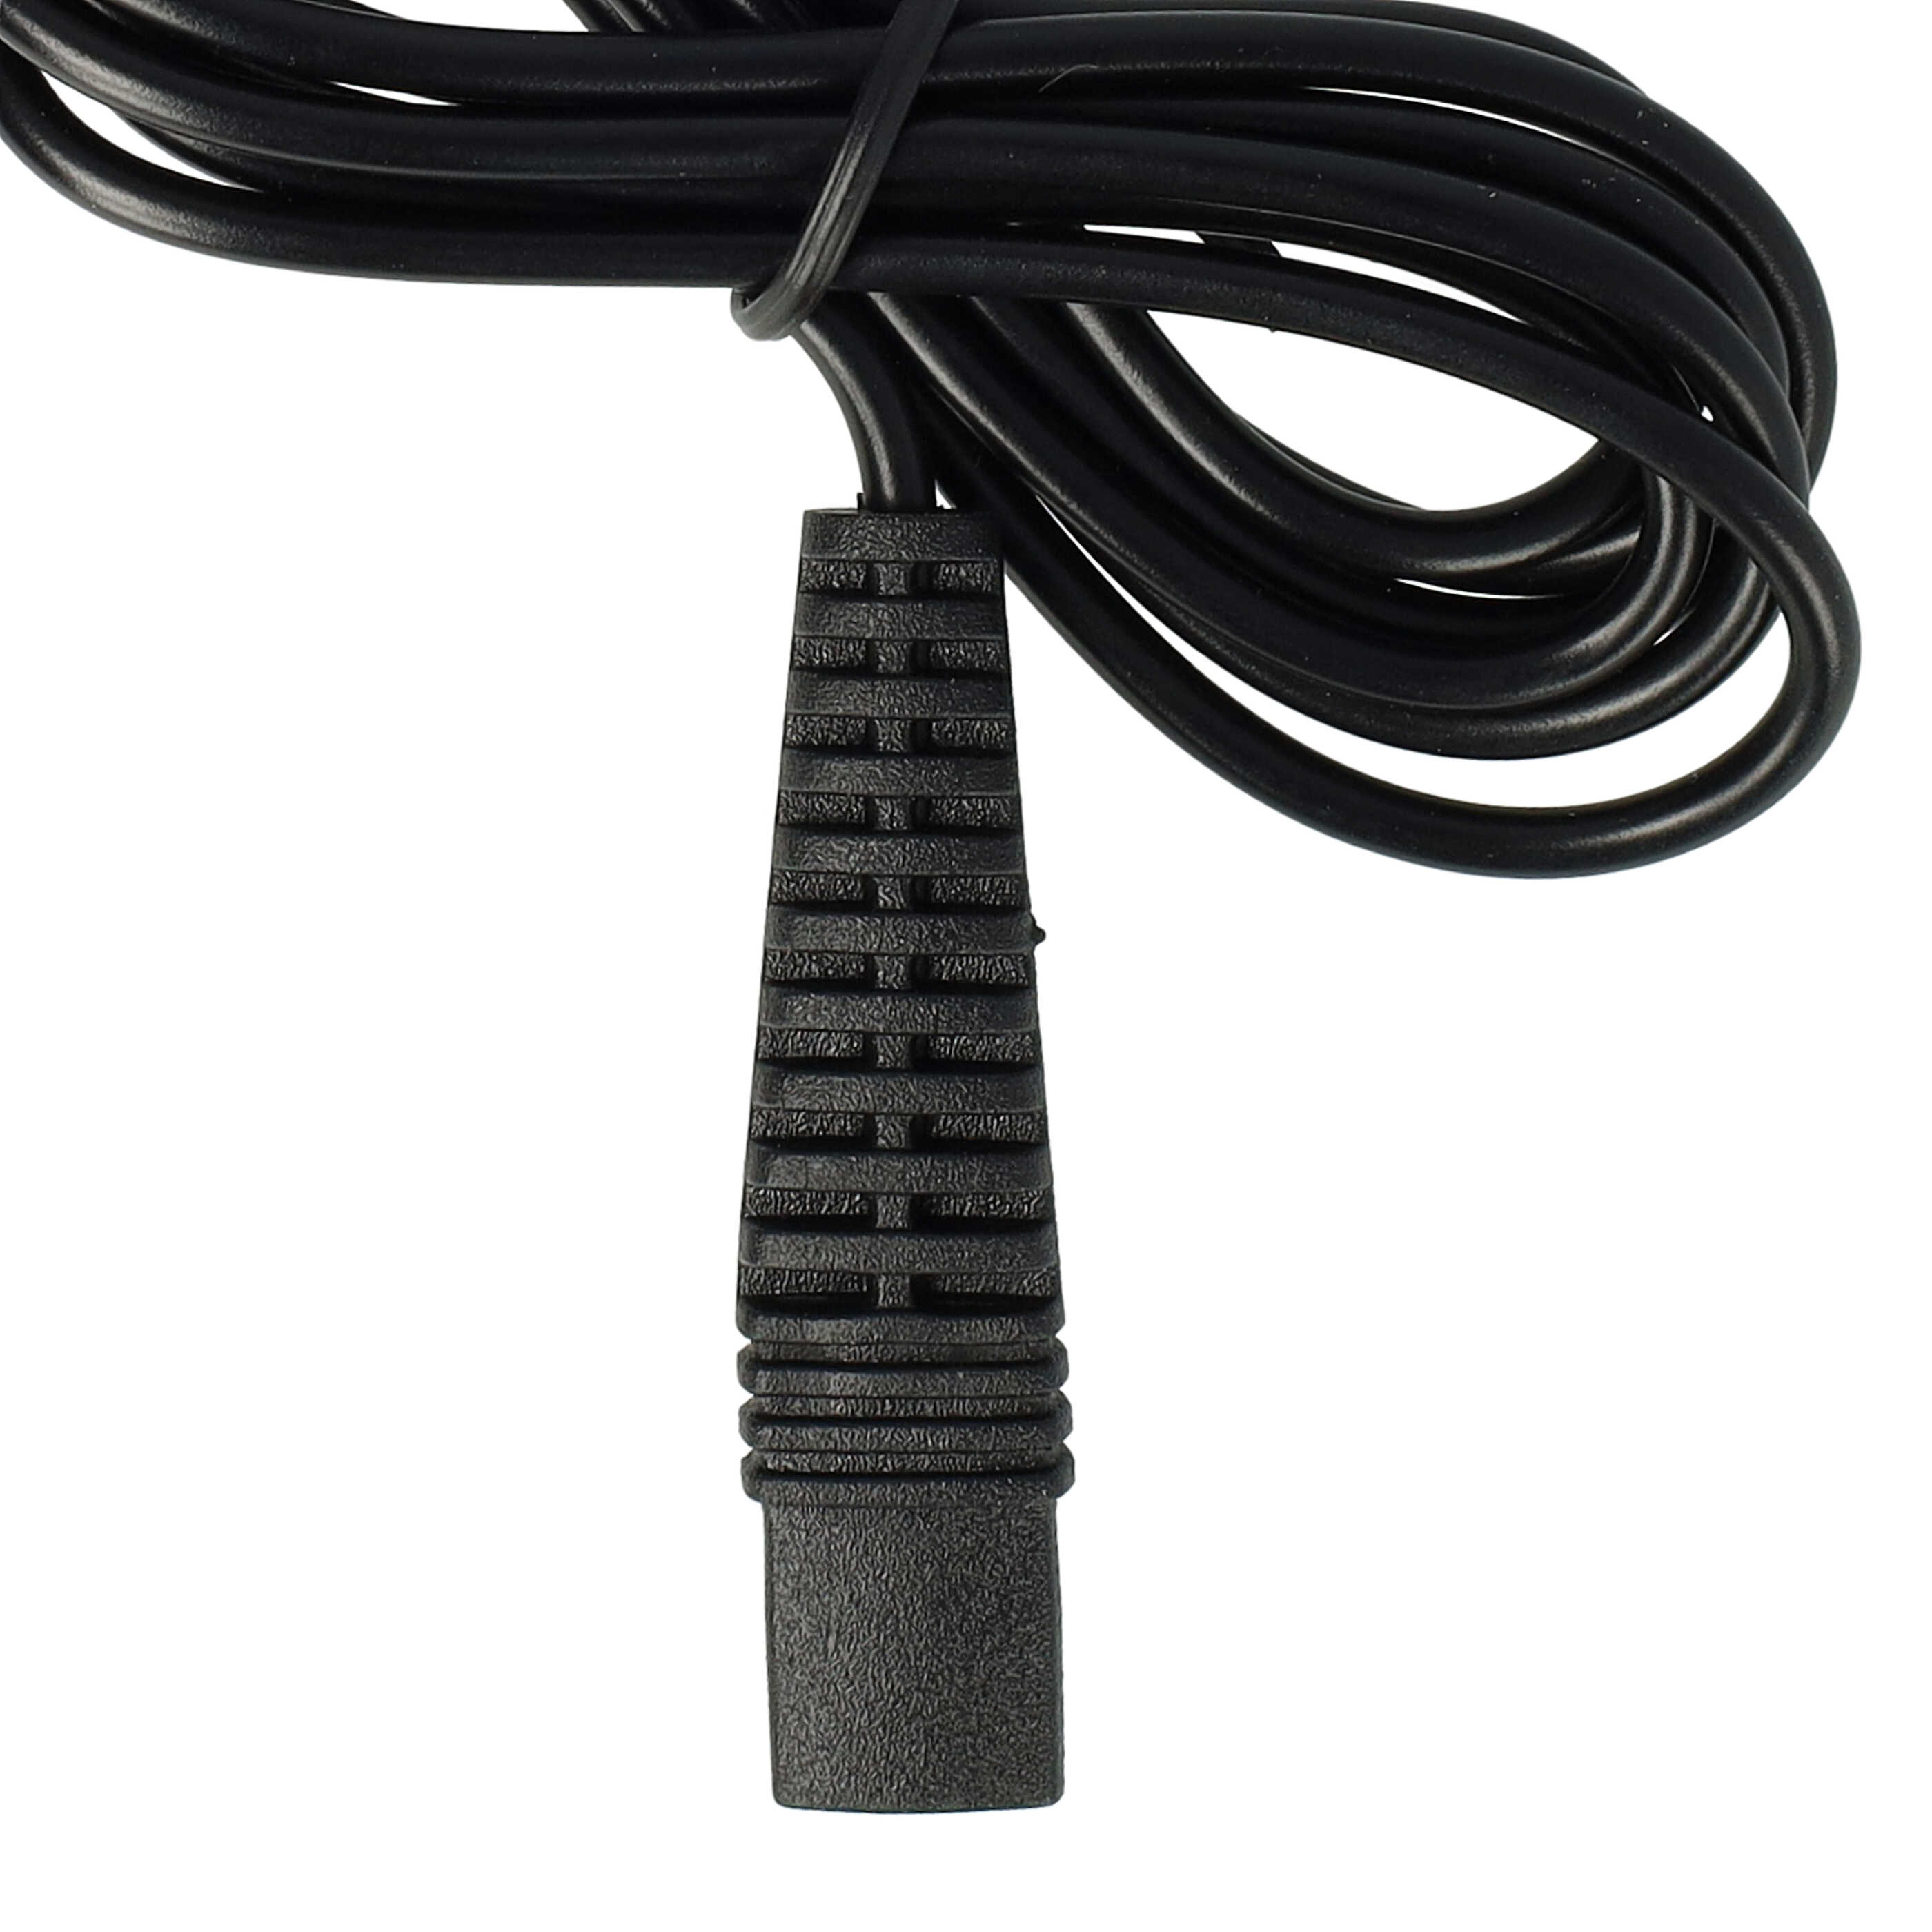 Caricabatterie USB per rasoio, spazzolino Braun, Oral-B HC20 (5611) - 120 cm